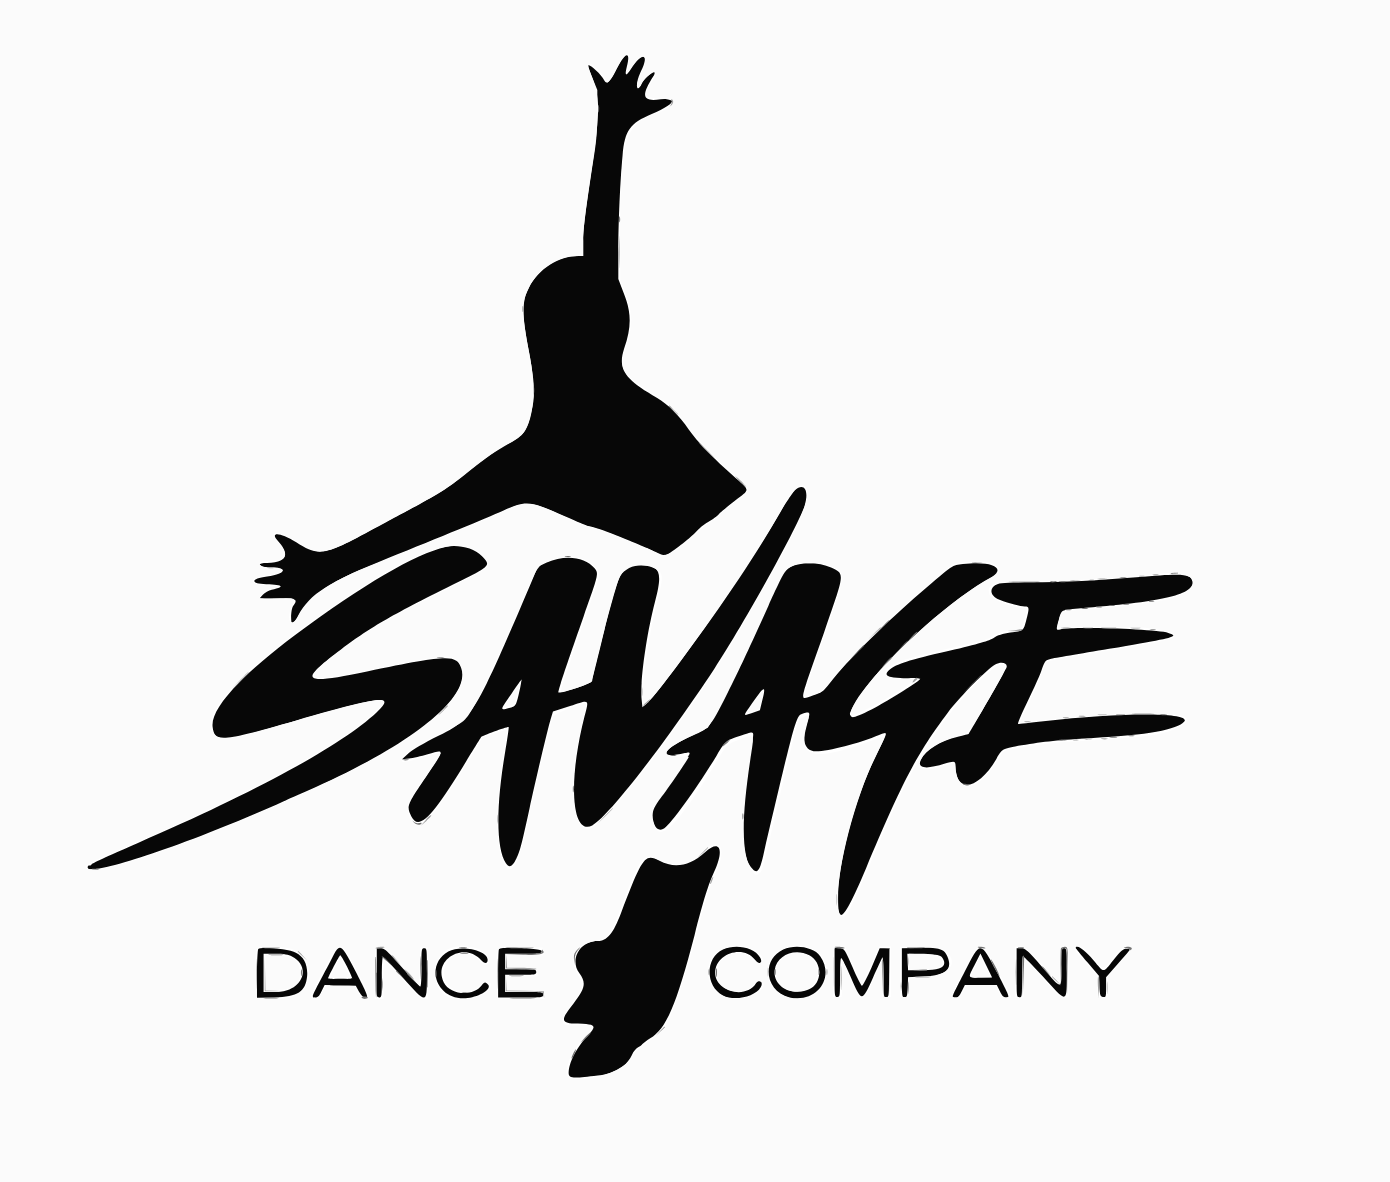 Savage Dance Company